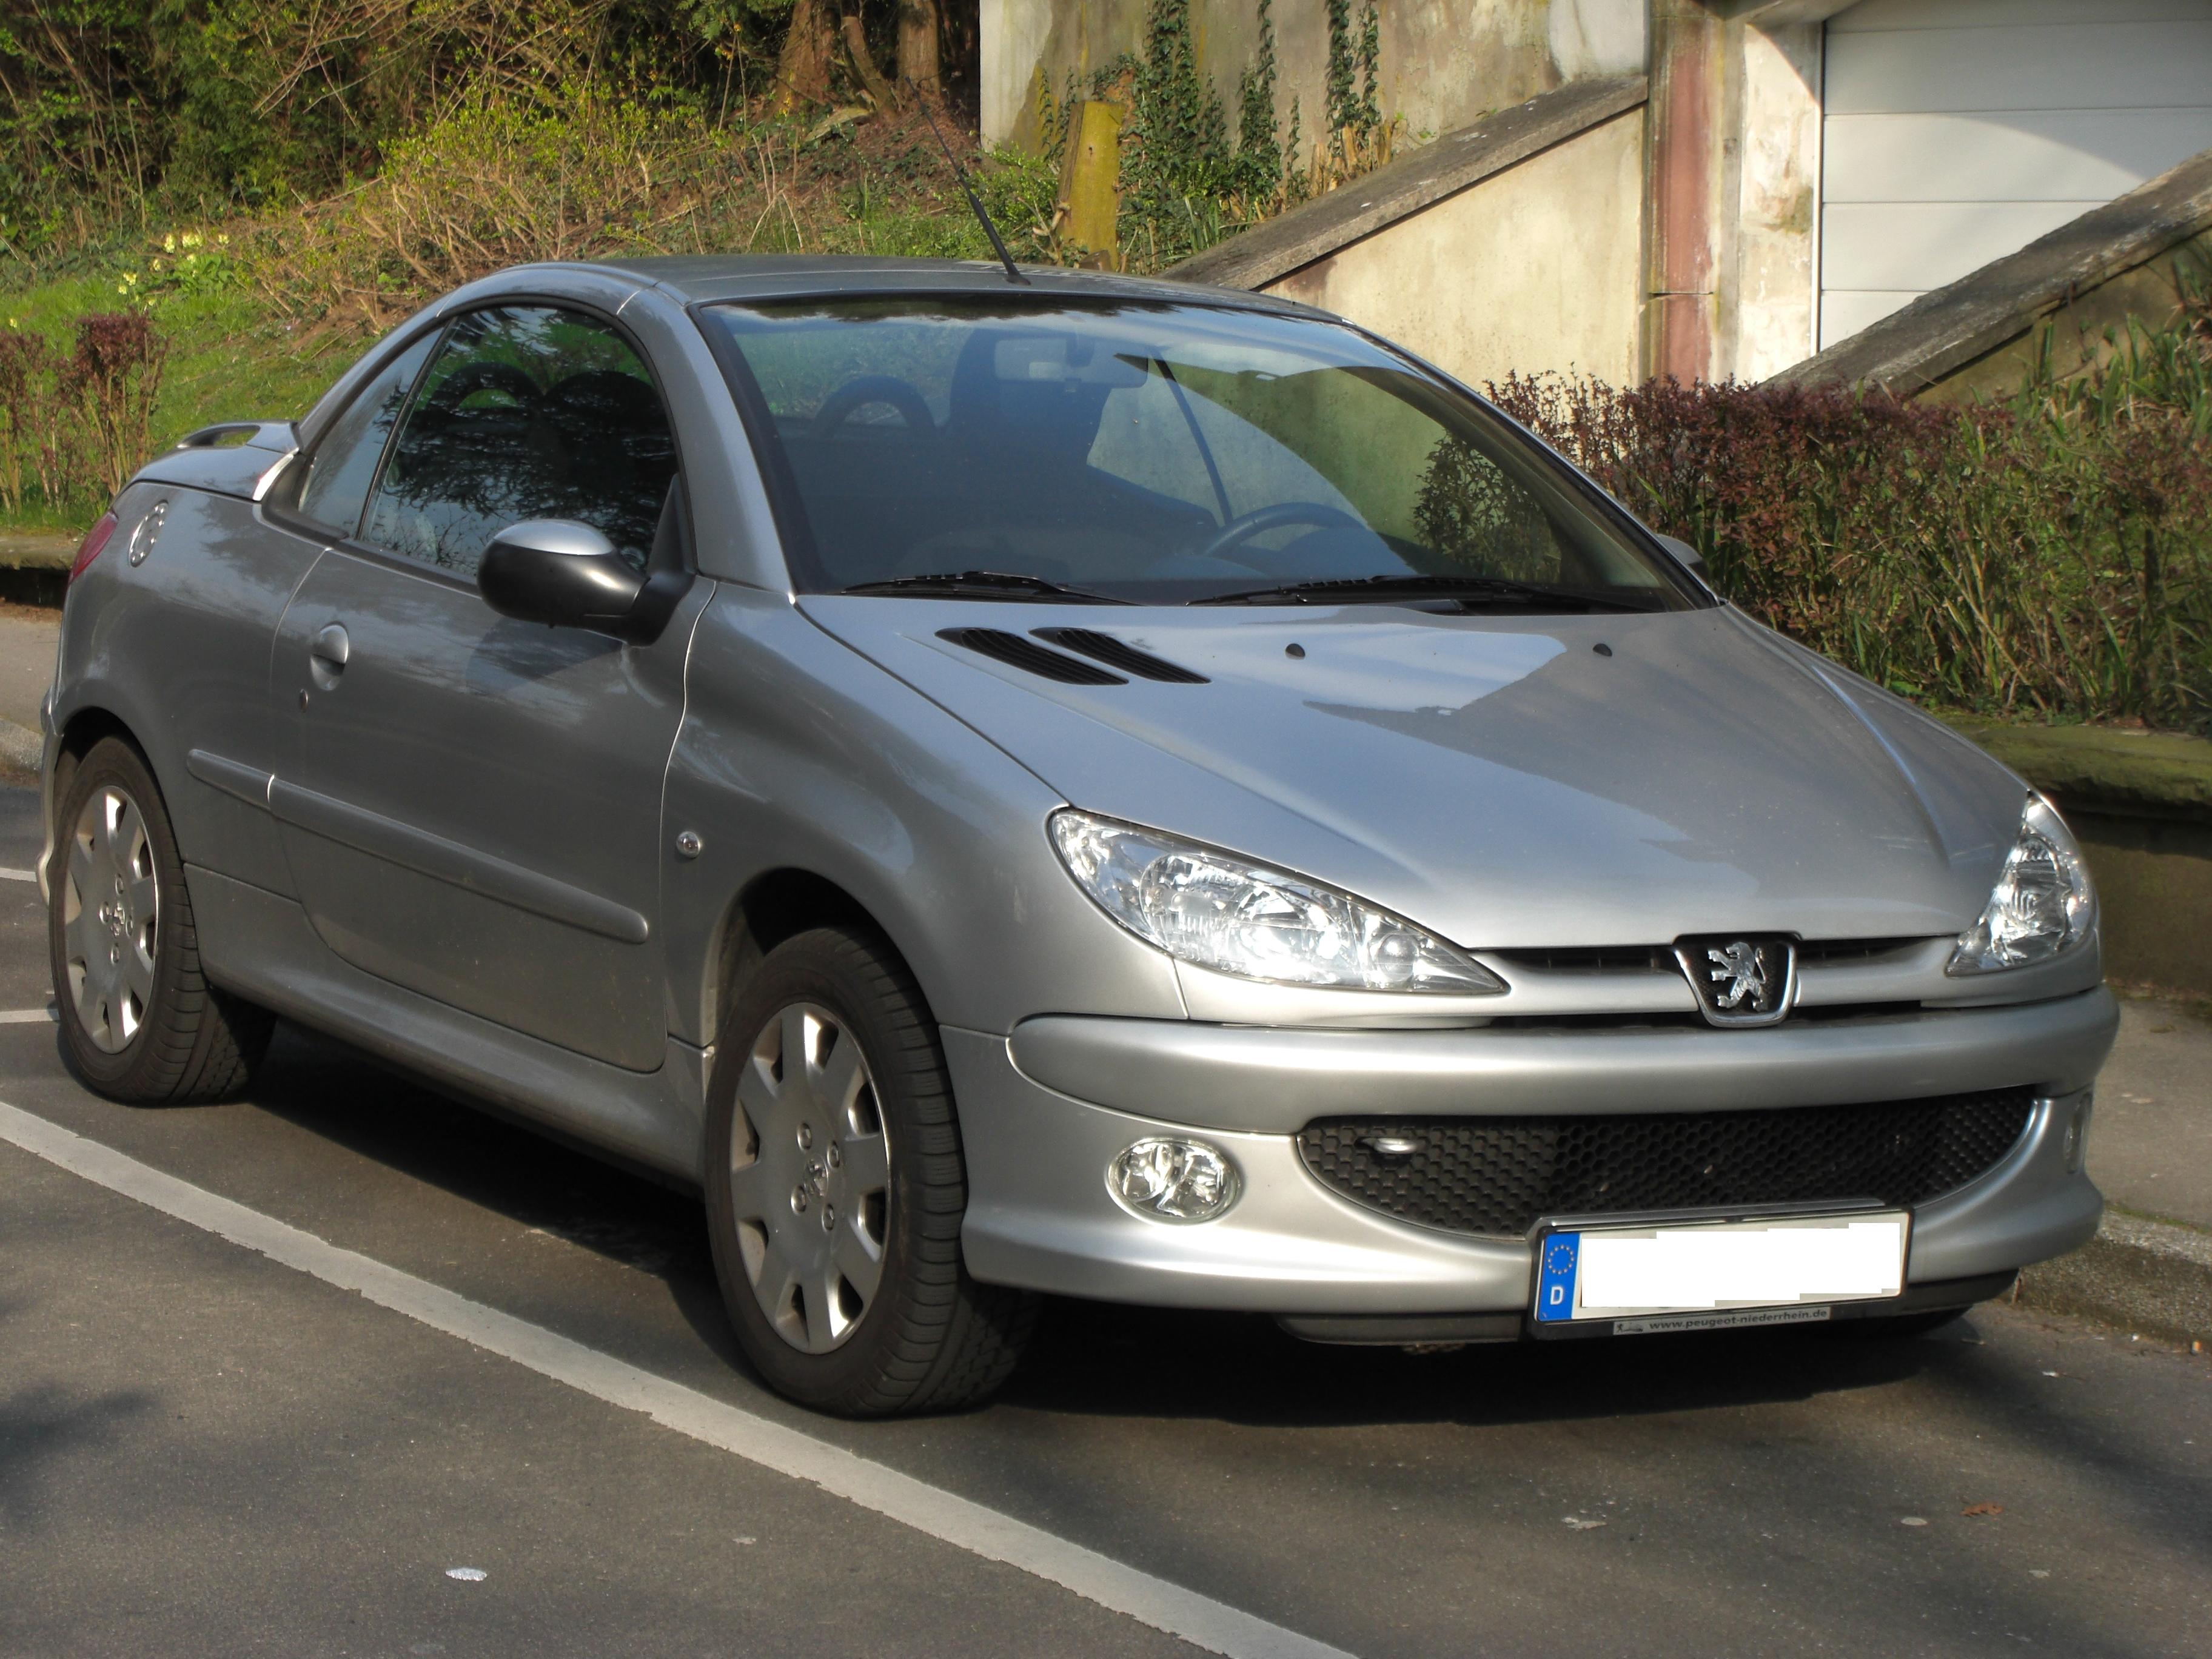 File:Peugeot 206CC Facelift front.jpg - Wikimedia Commons